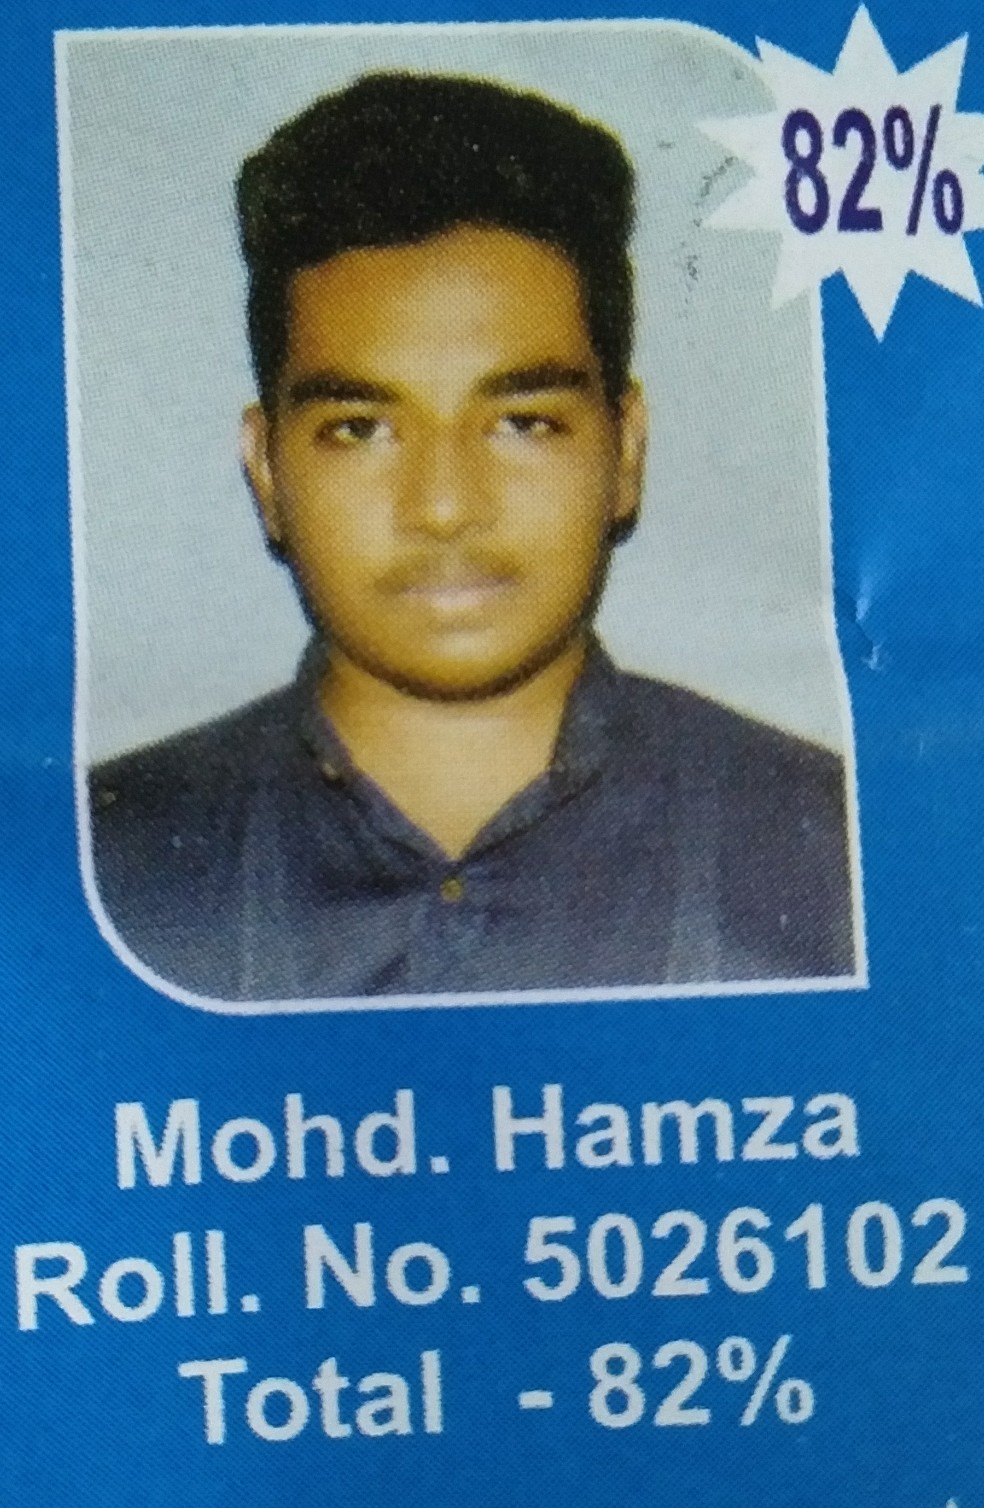 Mohd. Hamza